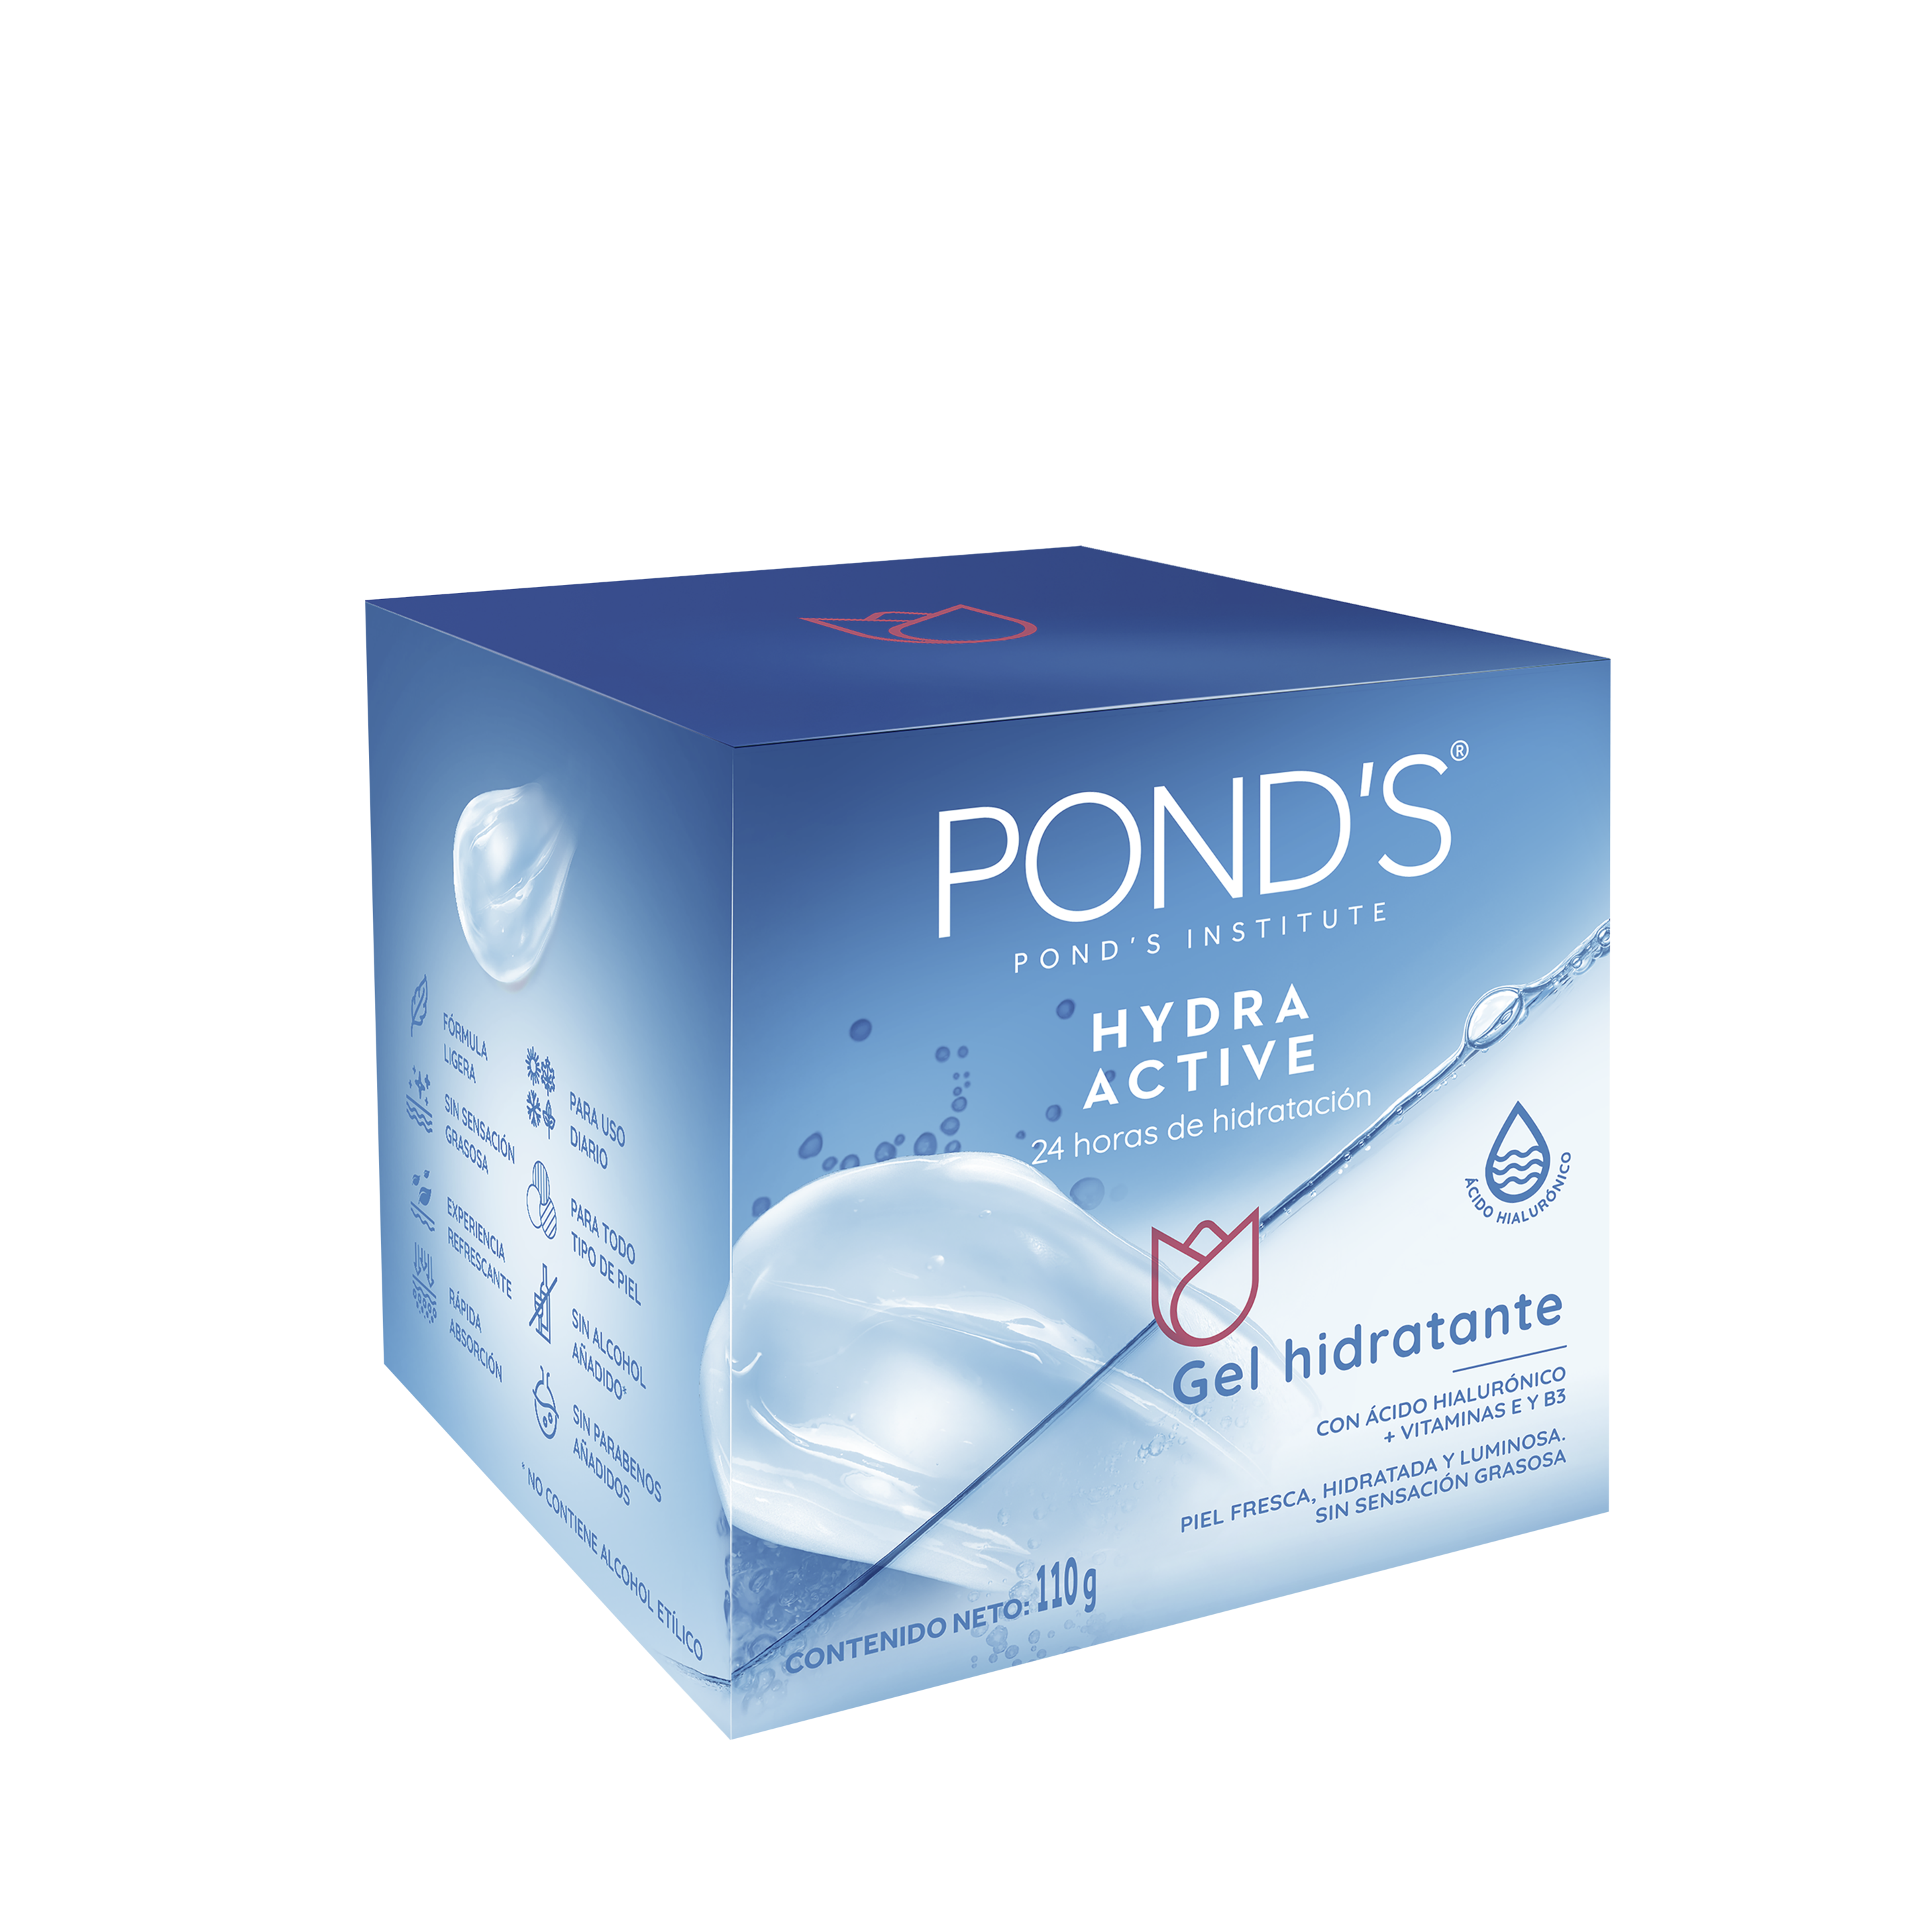 POND'S Gel Hidratante Hydra Active